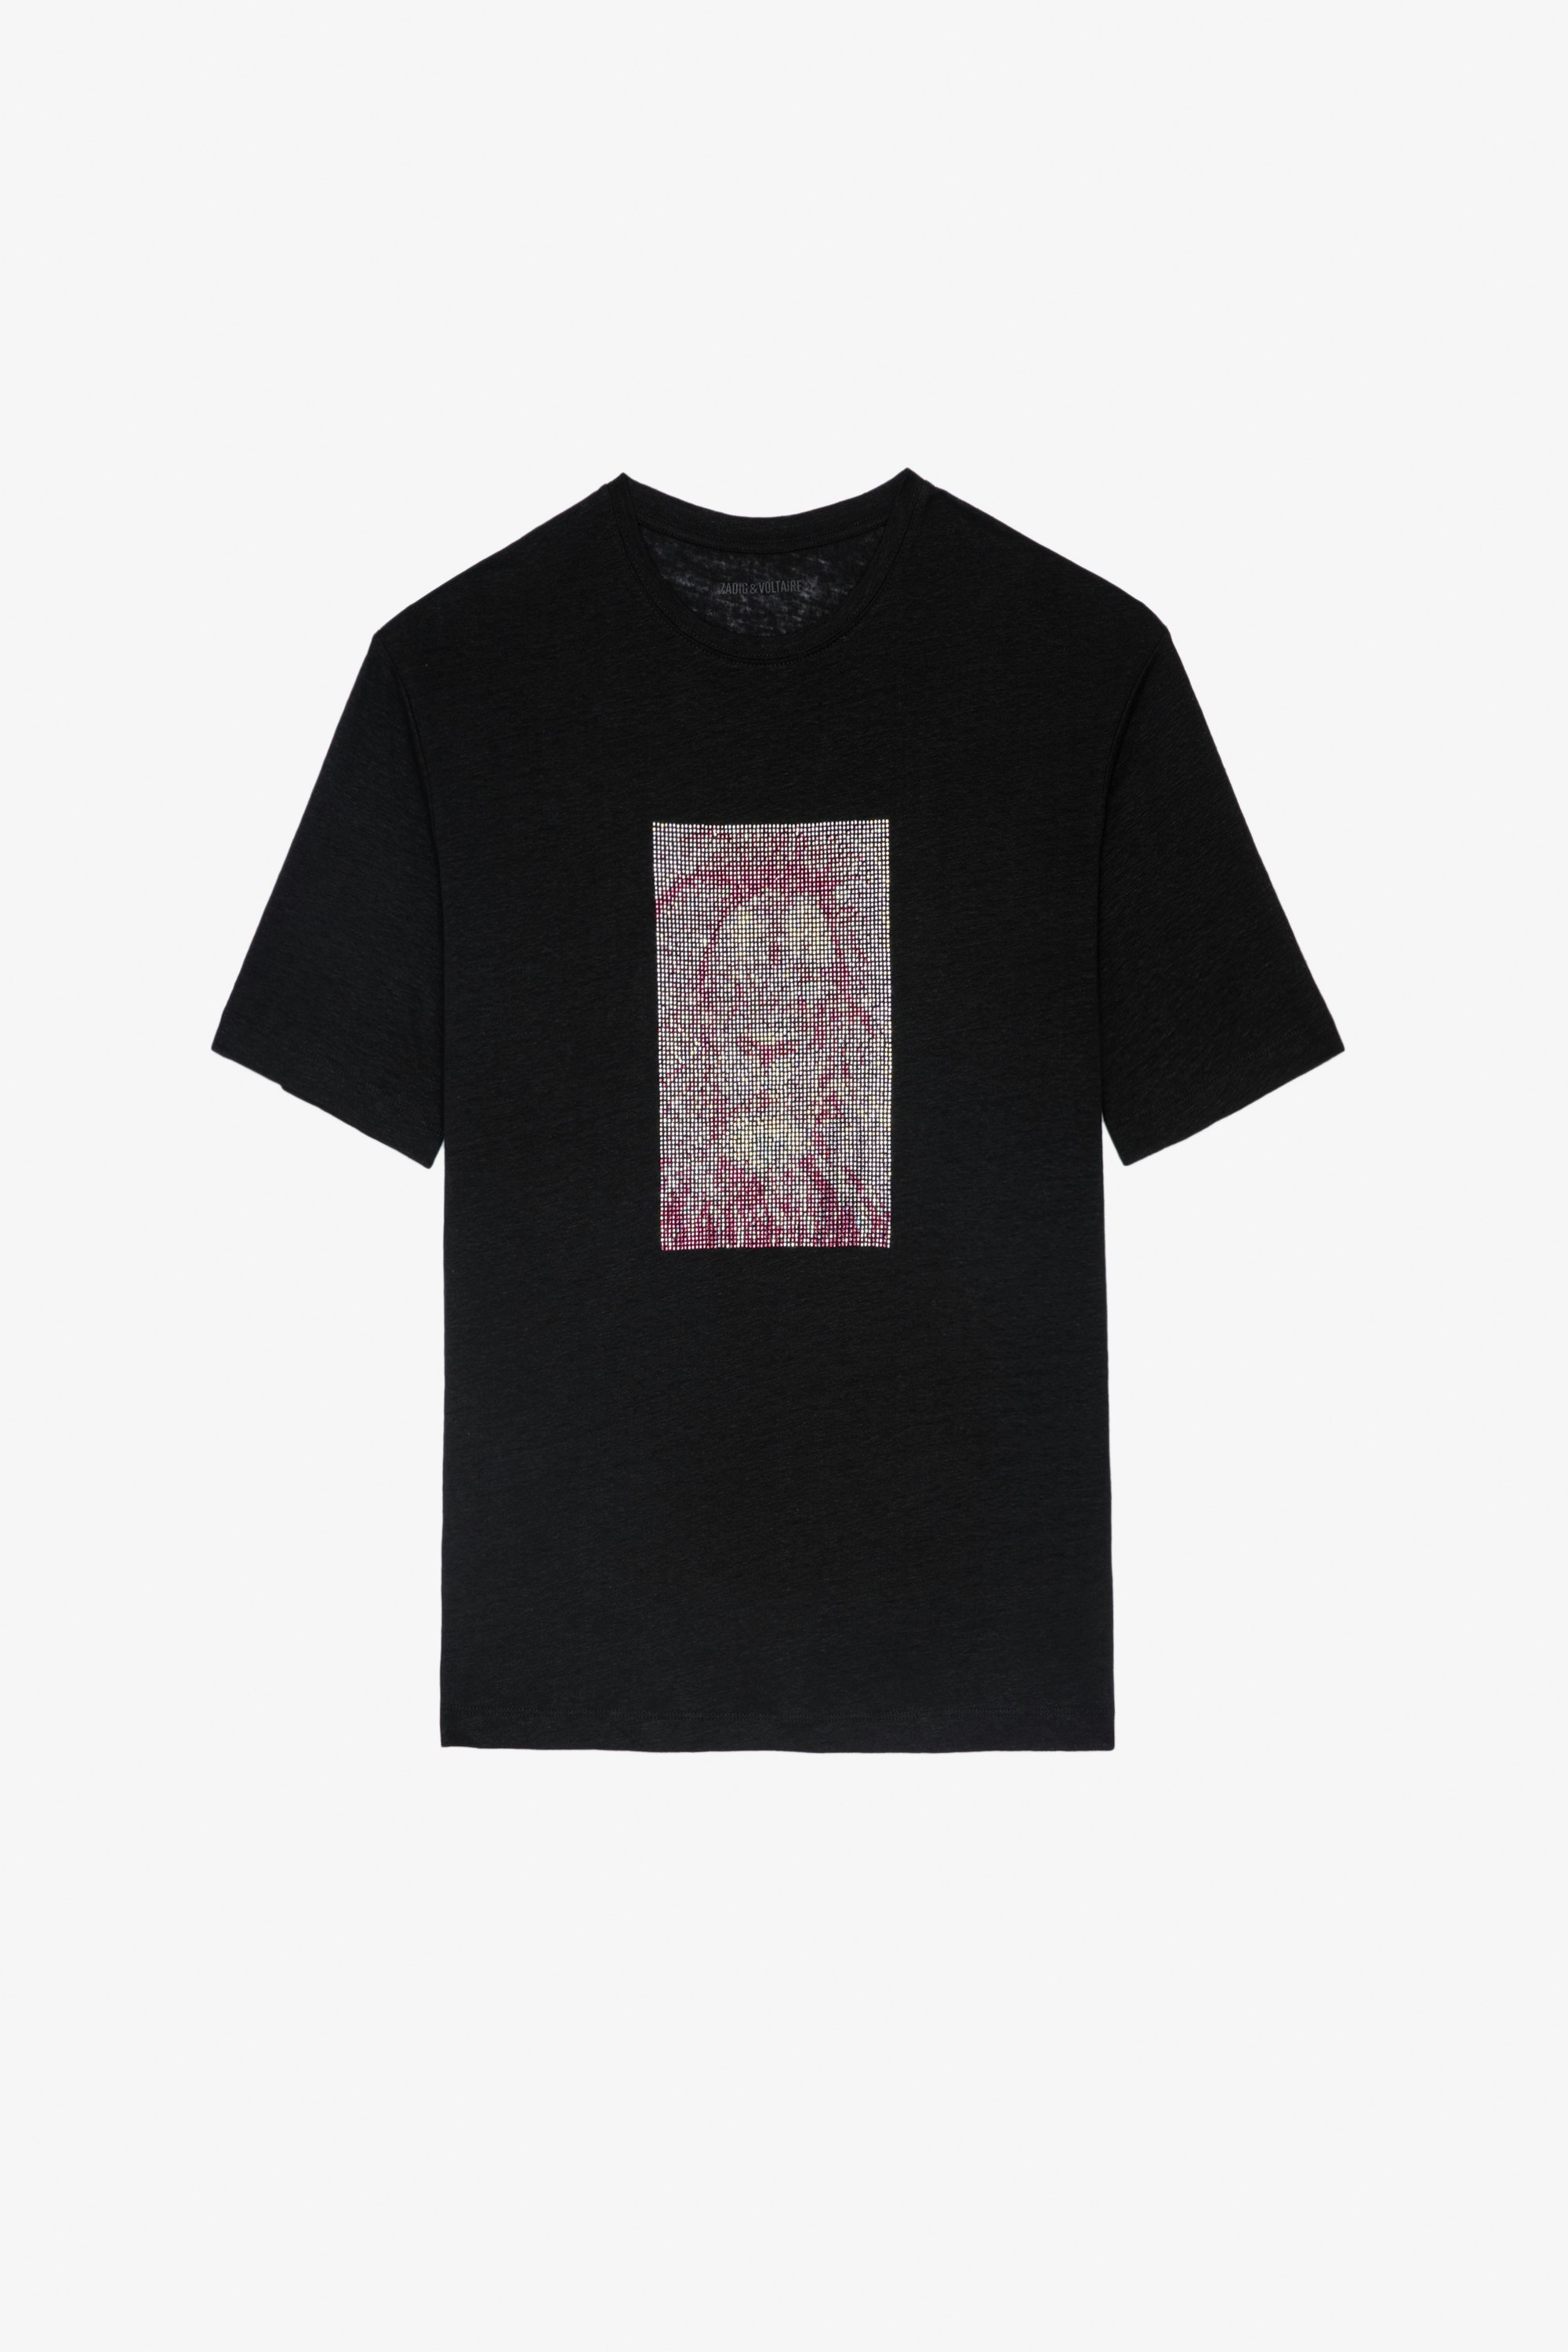 Suzy Linen T-Shirt ブラックリネン ライオンとクリスタルのコントラストTシャツ レディース